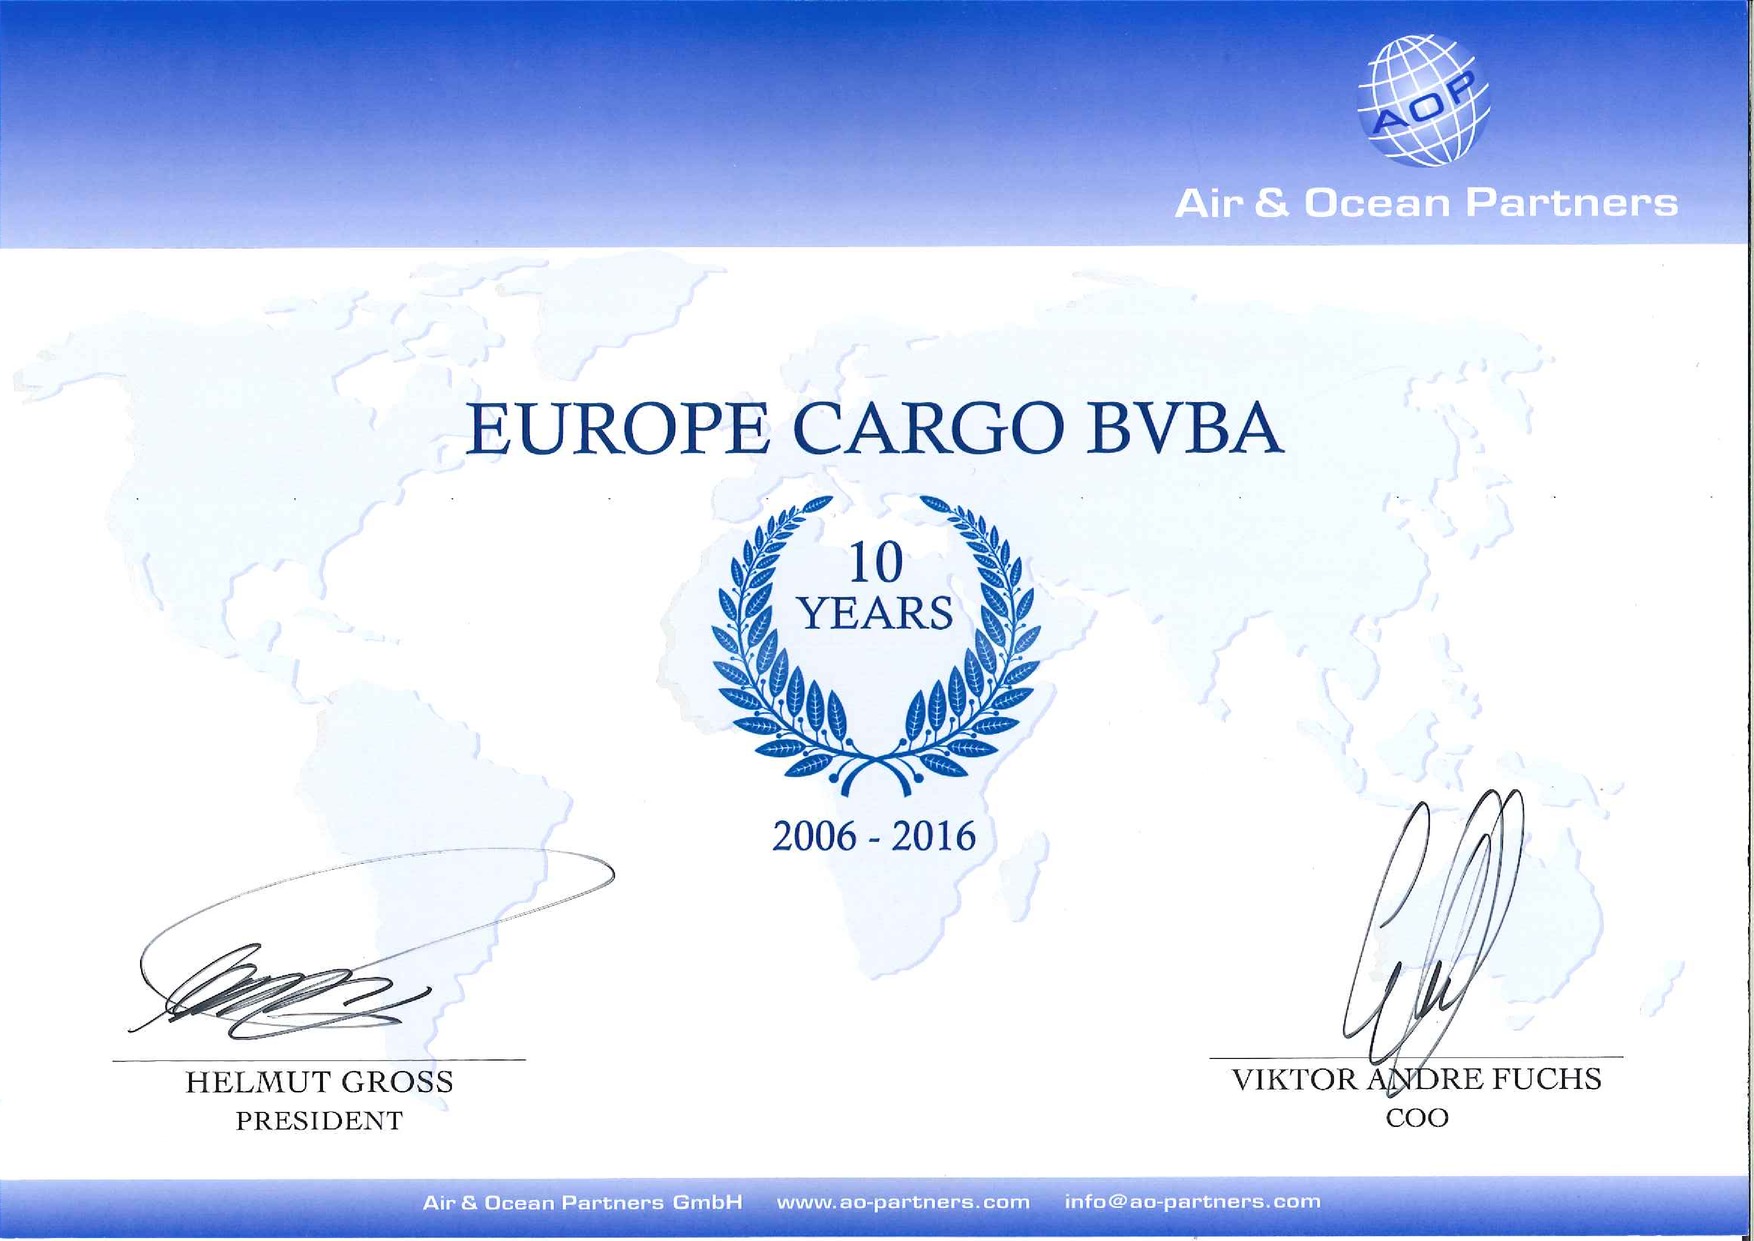 Europe Cargo already 10 Years Member of AOP